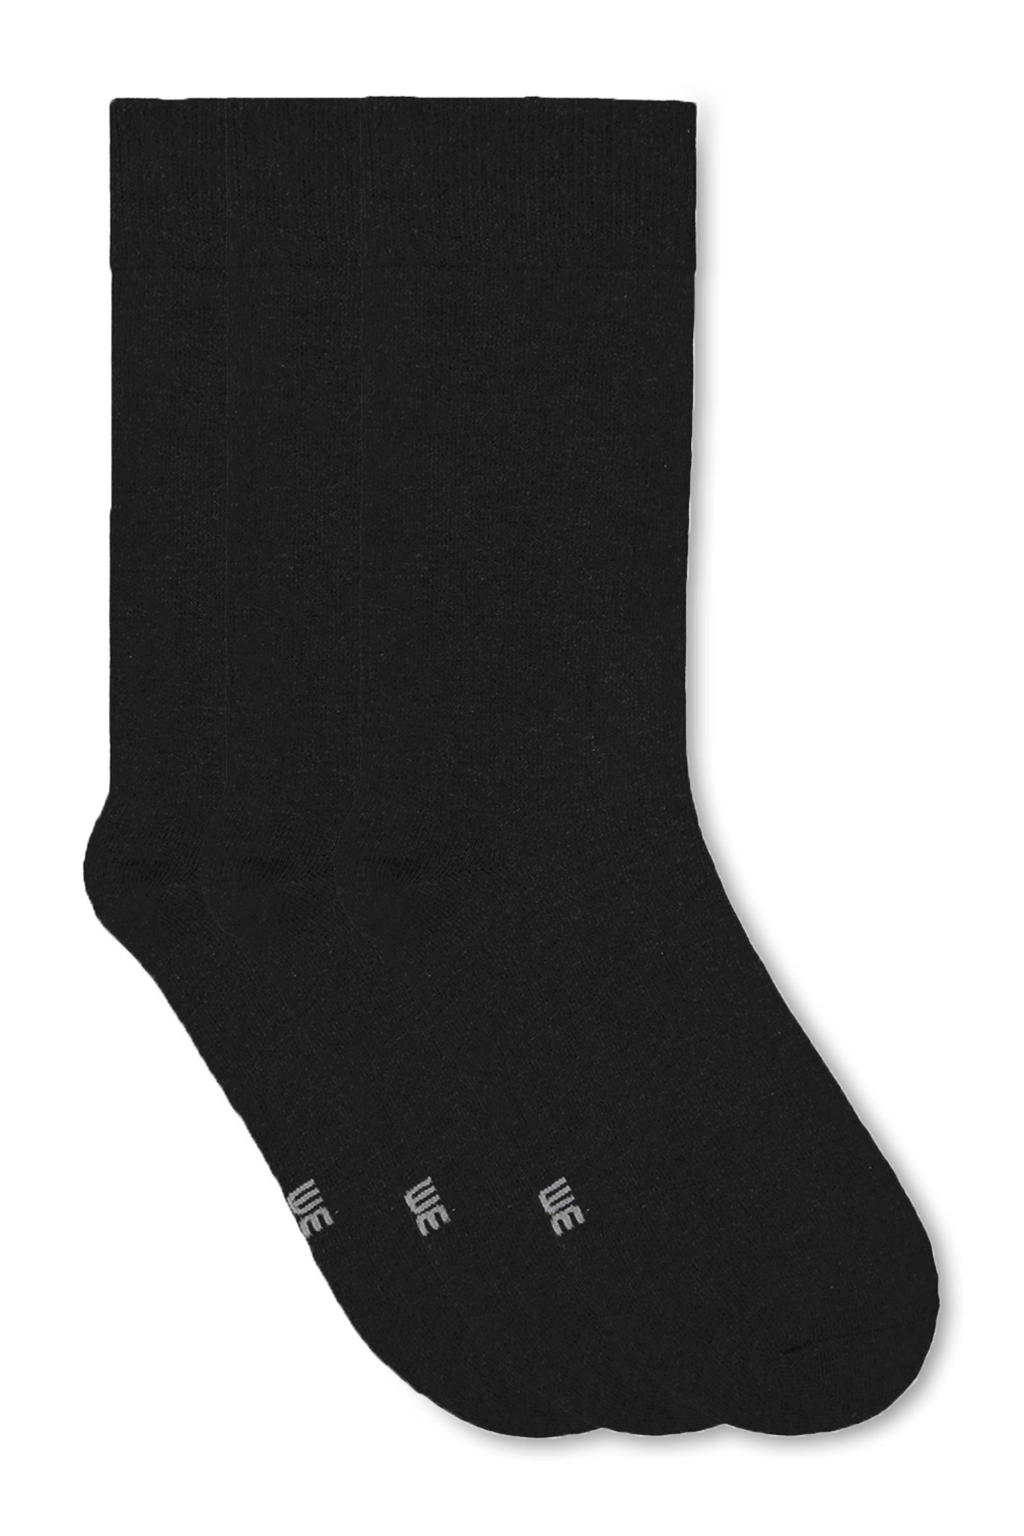 WE Fashion sokken - set van 3 zwart